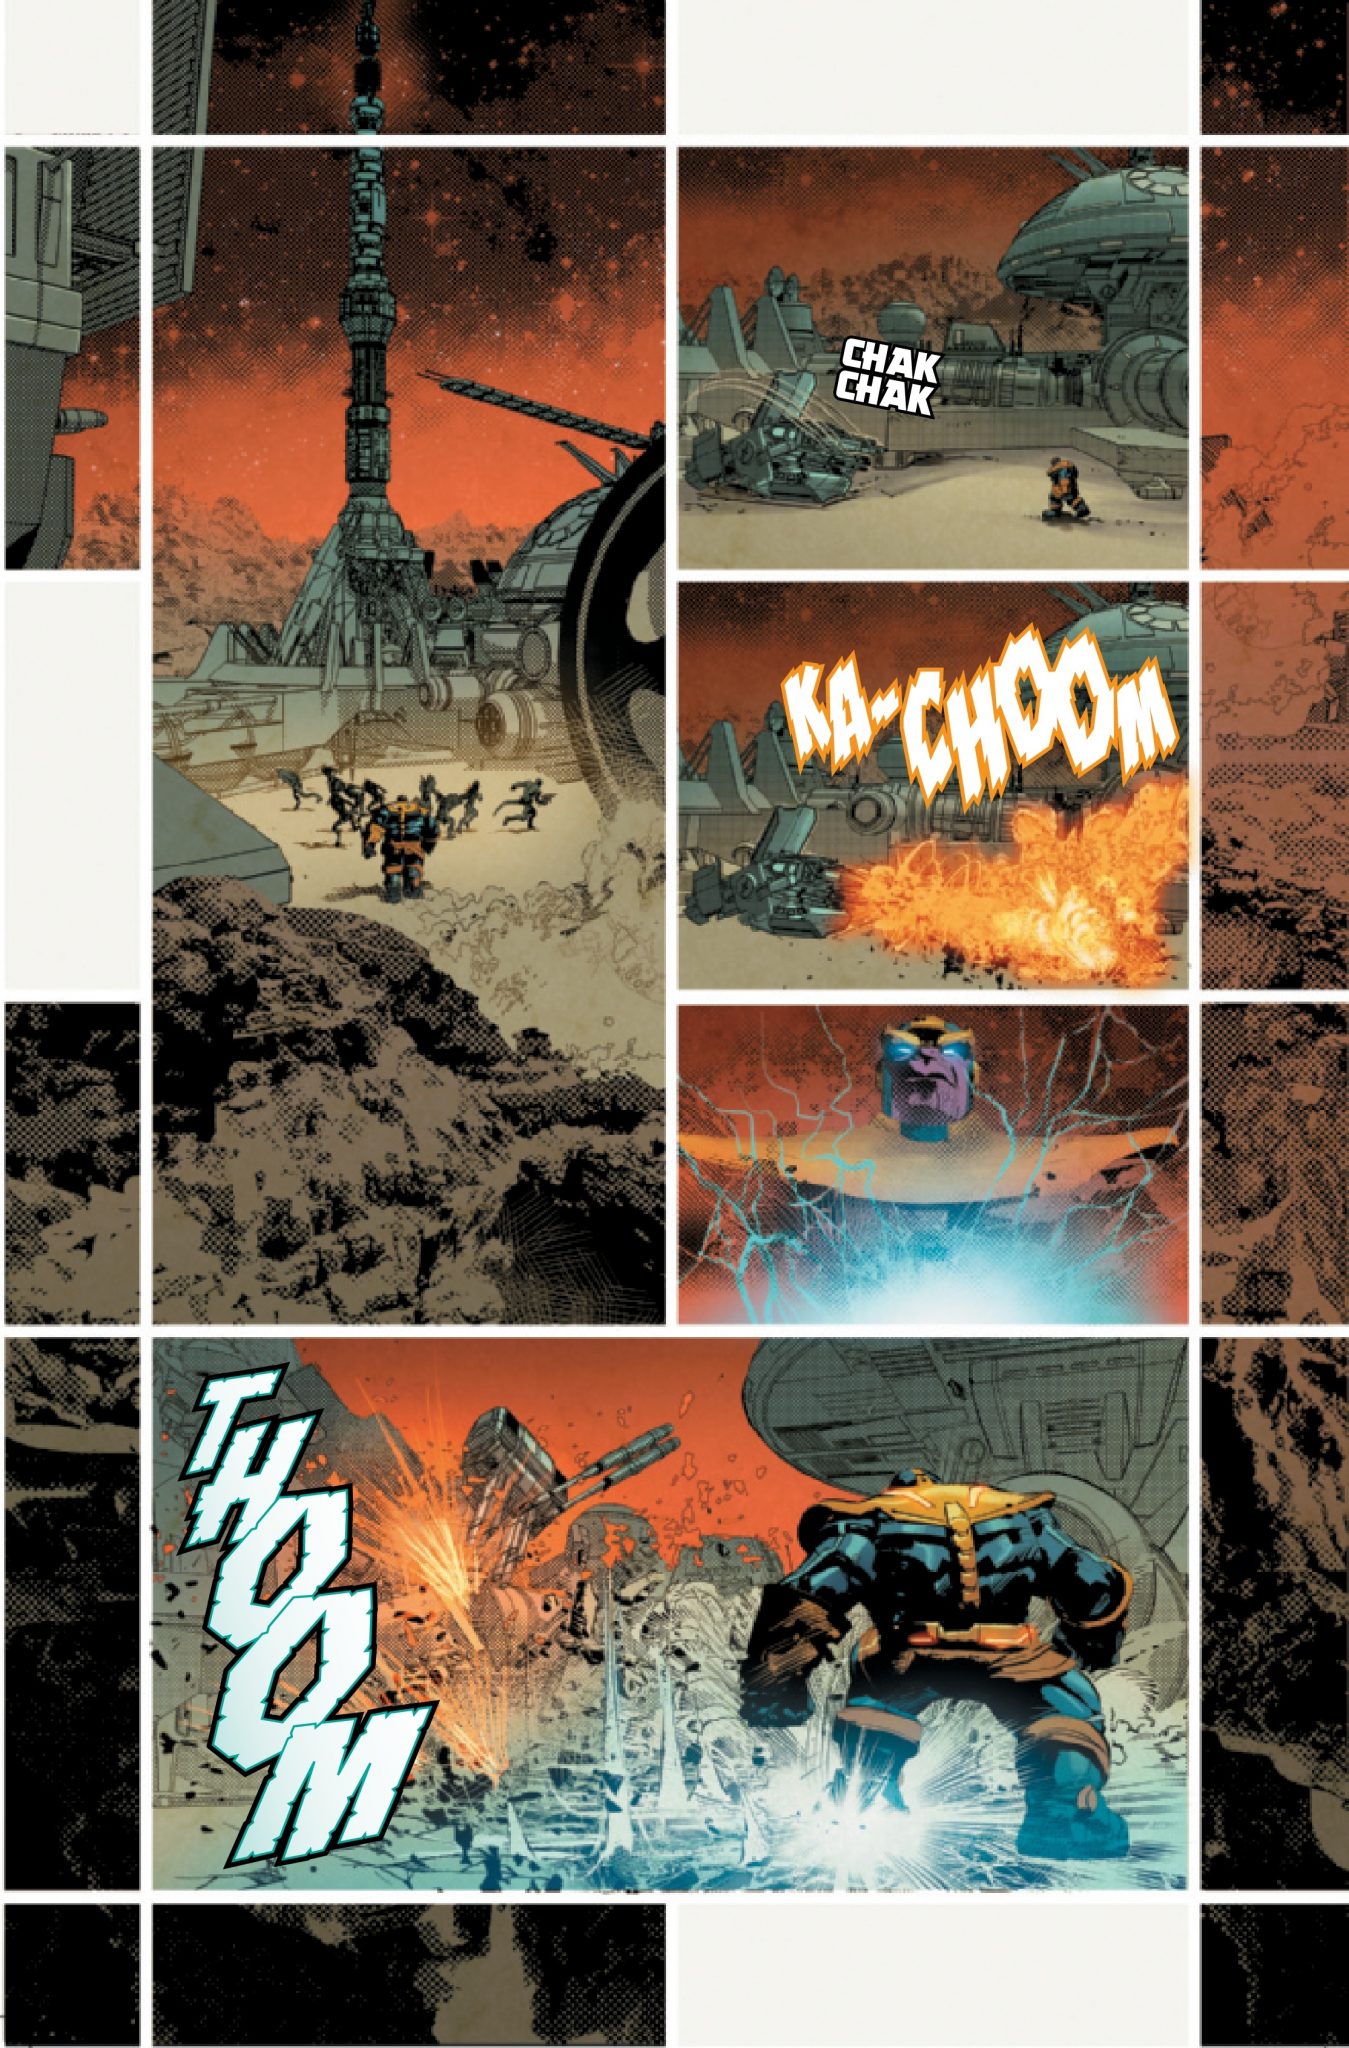 Thanos #1 - Marvel Comics - Blog Farofeiros